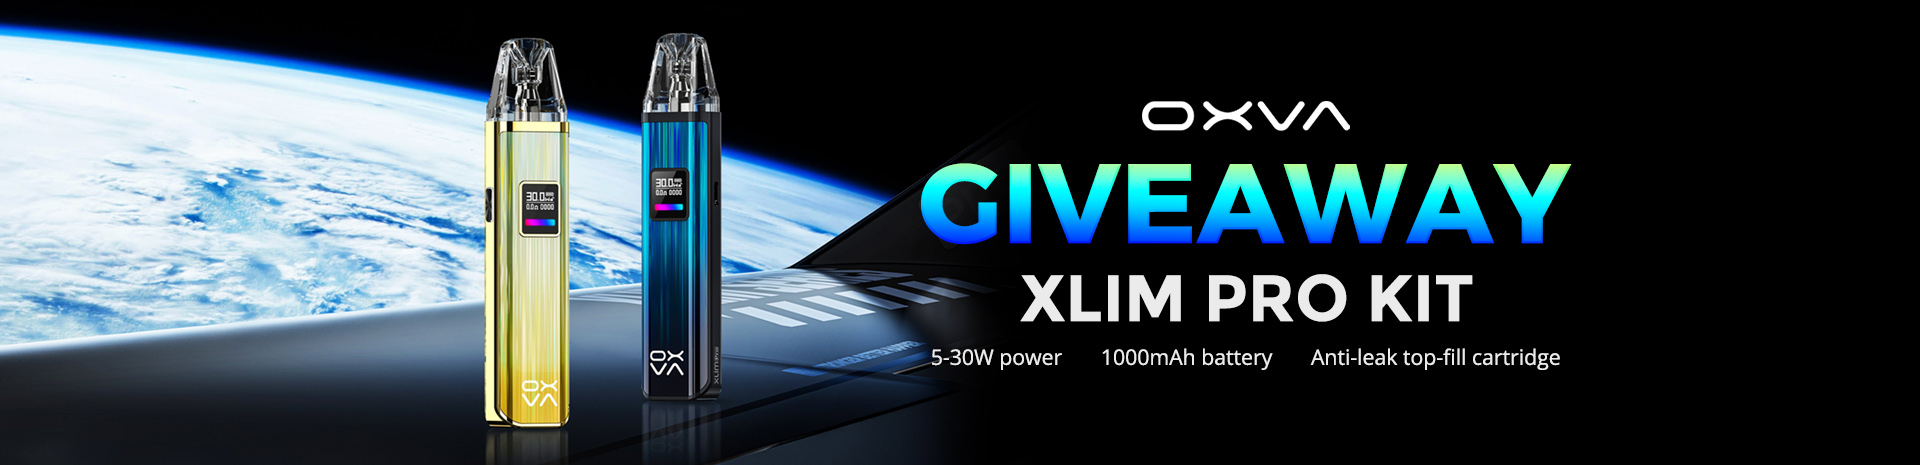 OXVA Xlim Pro Kit Giveaway